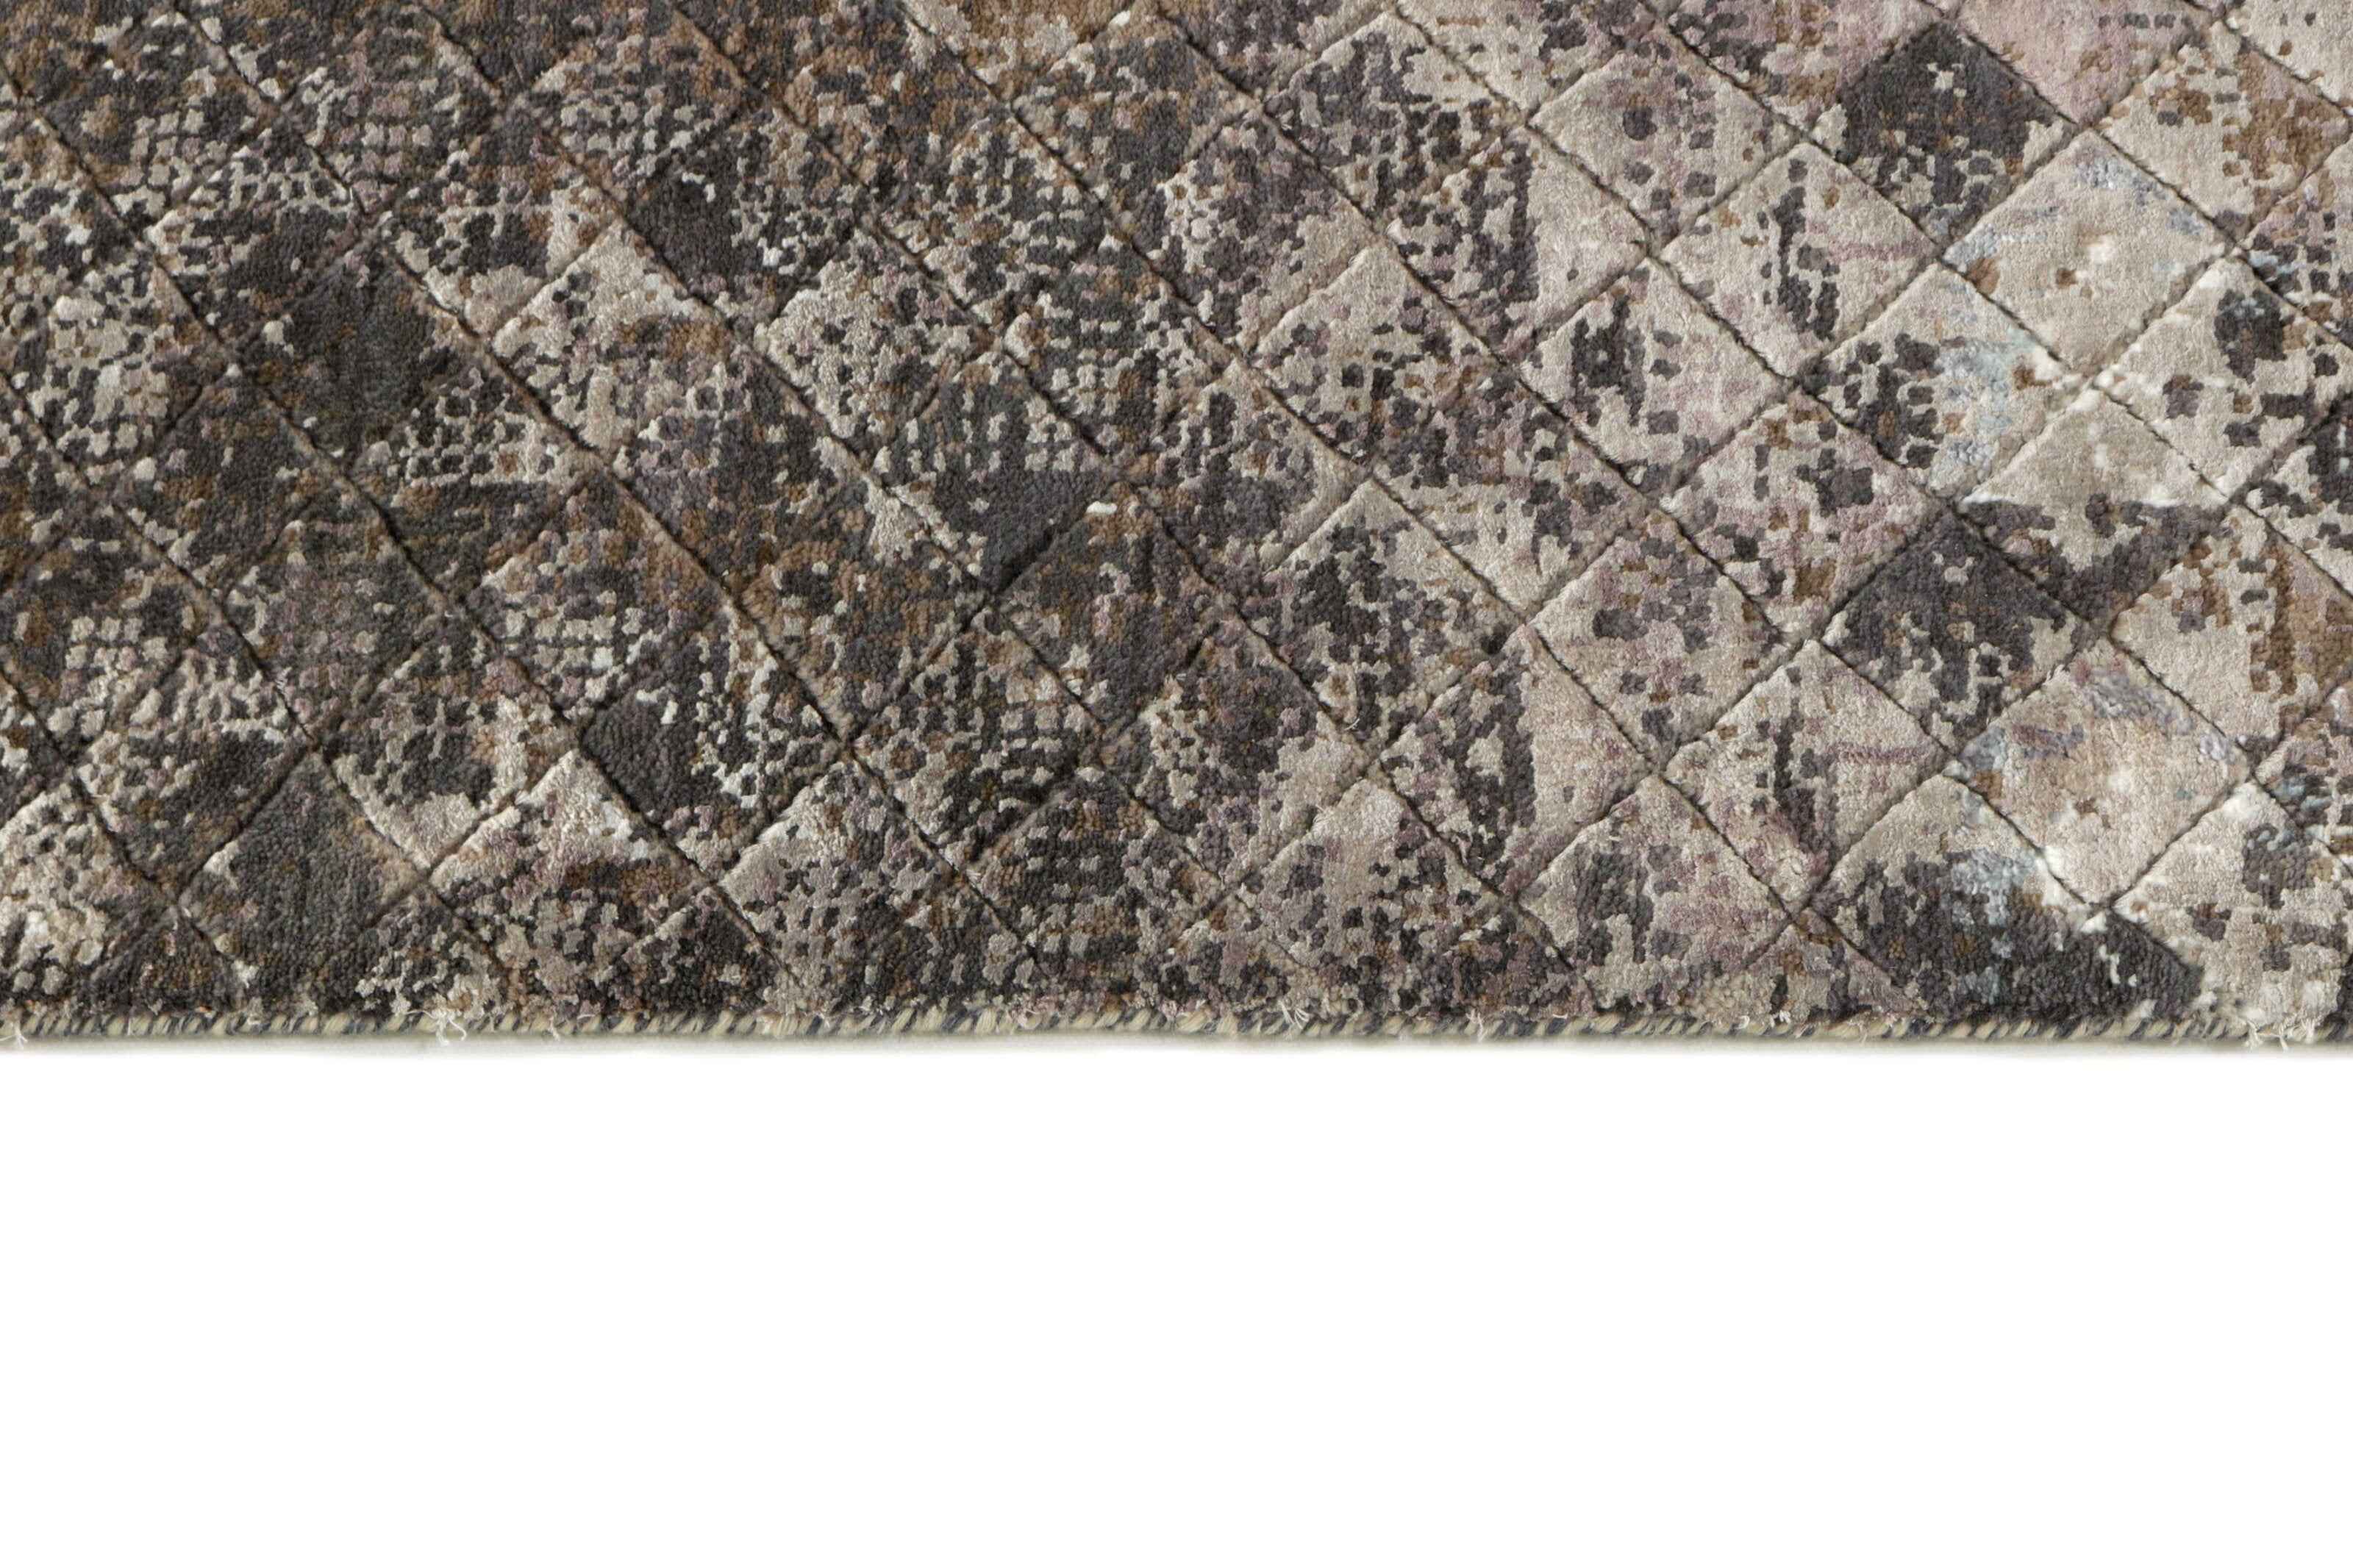 391 x 391 cm Indian Wool/Viscose Brown Rug-740141 - Rugmaster